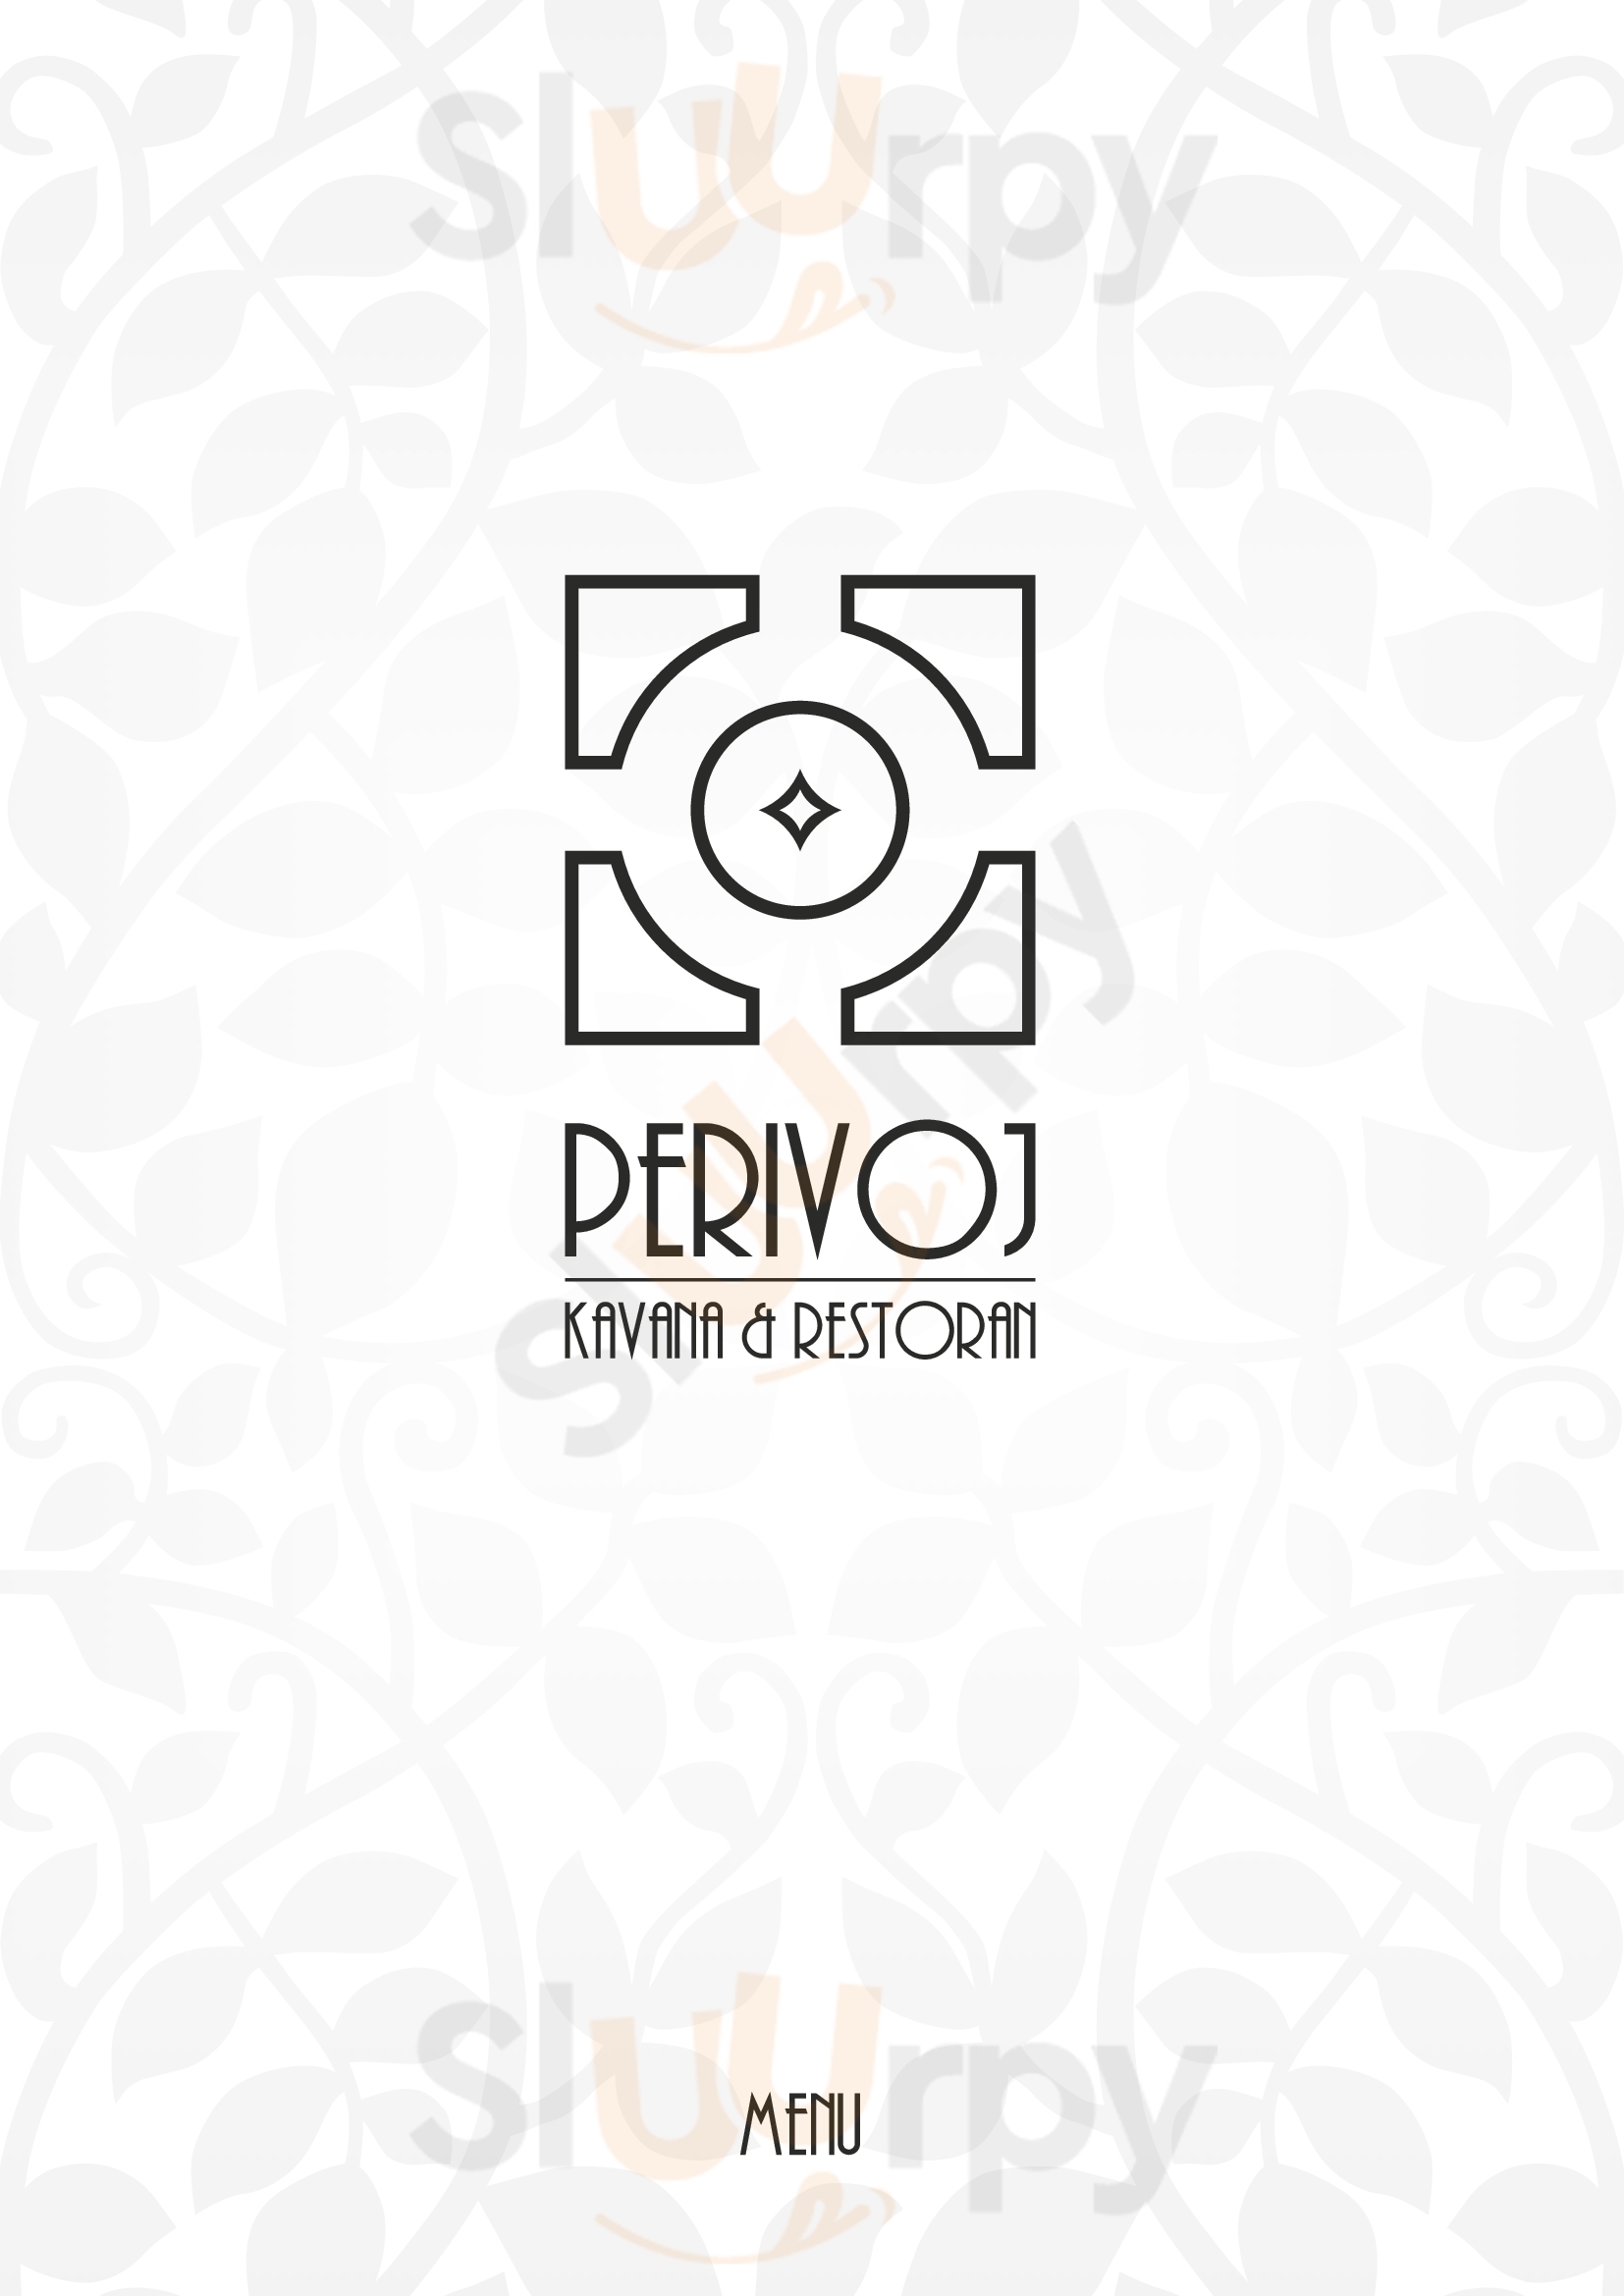 Perivoj Restoran & Kavana Split Menu - 1